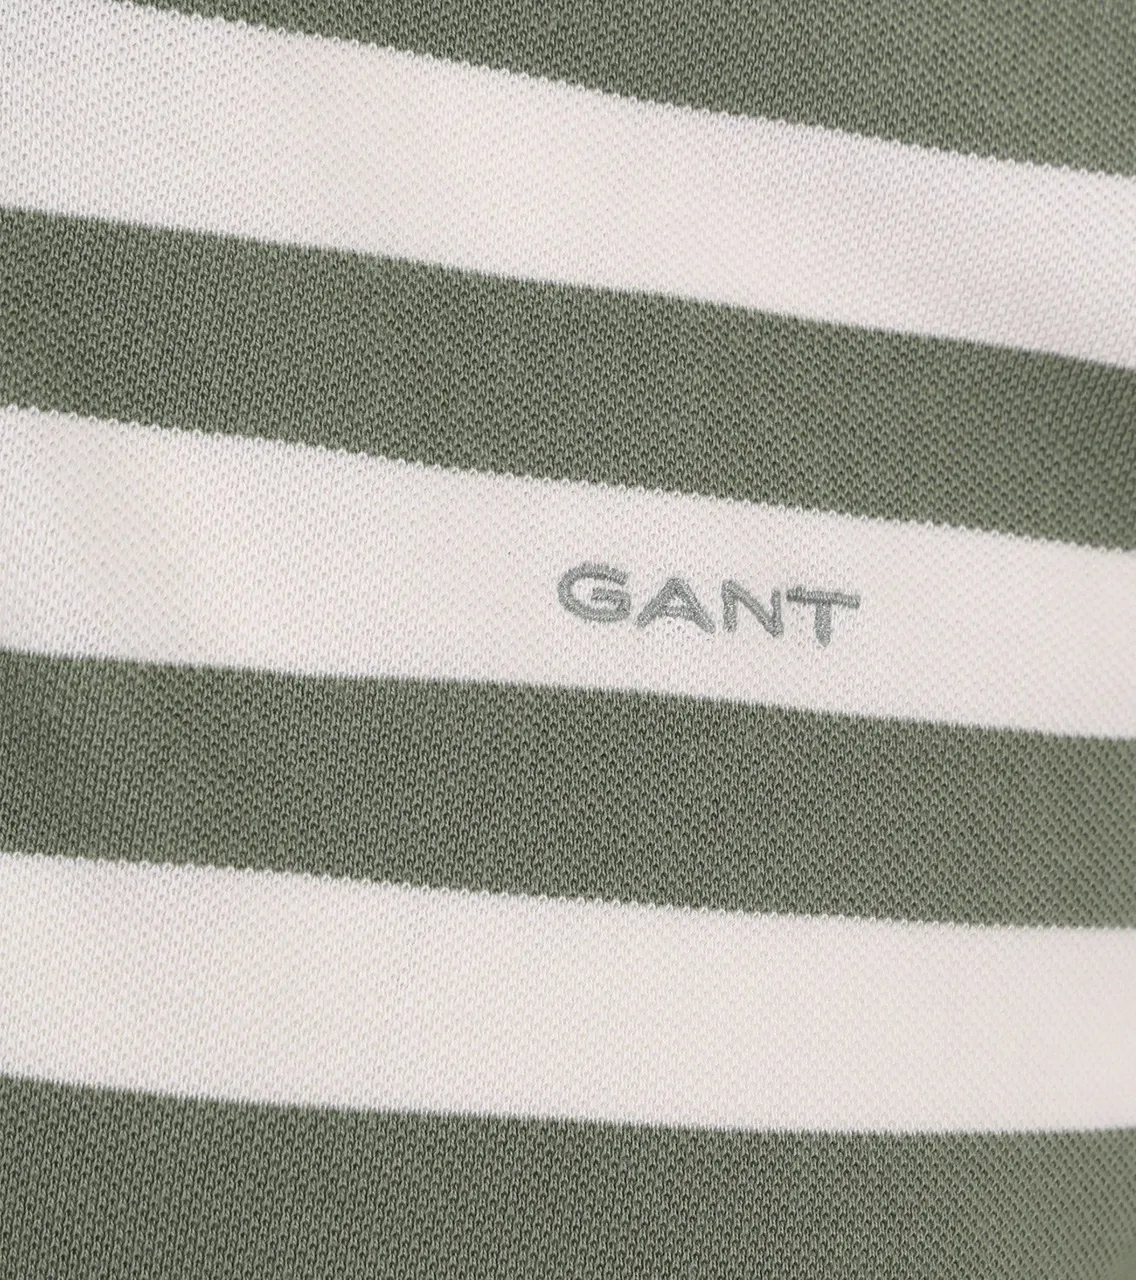 Gant Polo Shirt Stripes Green